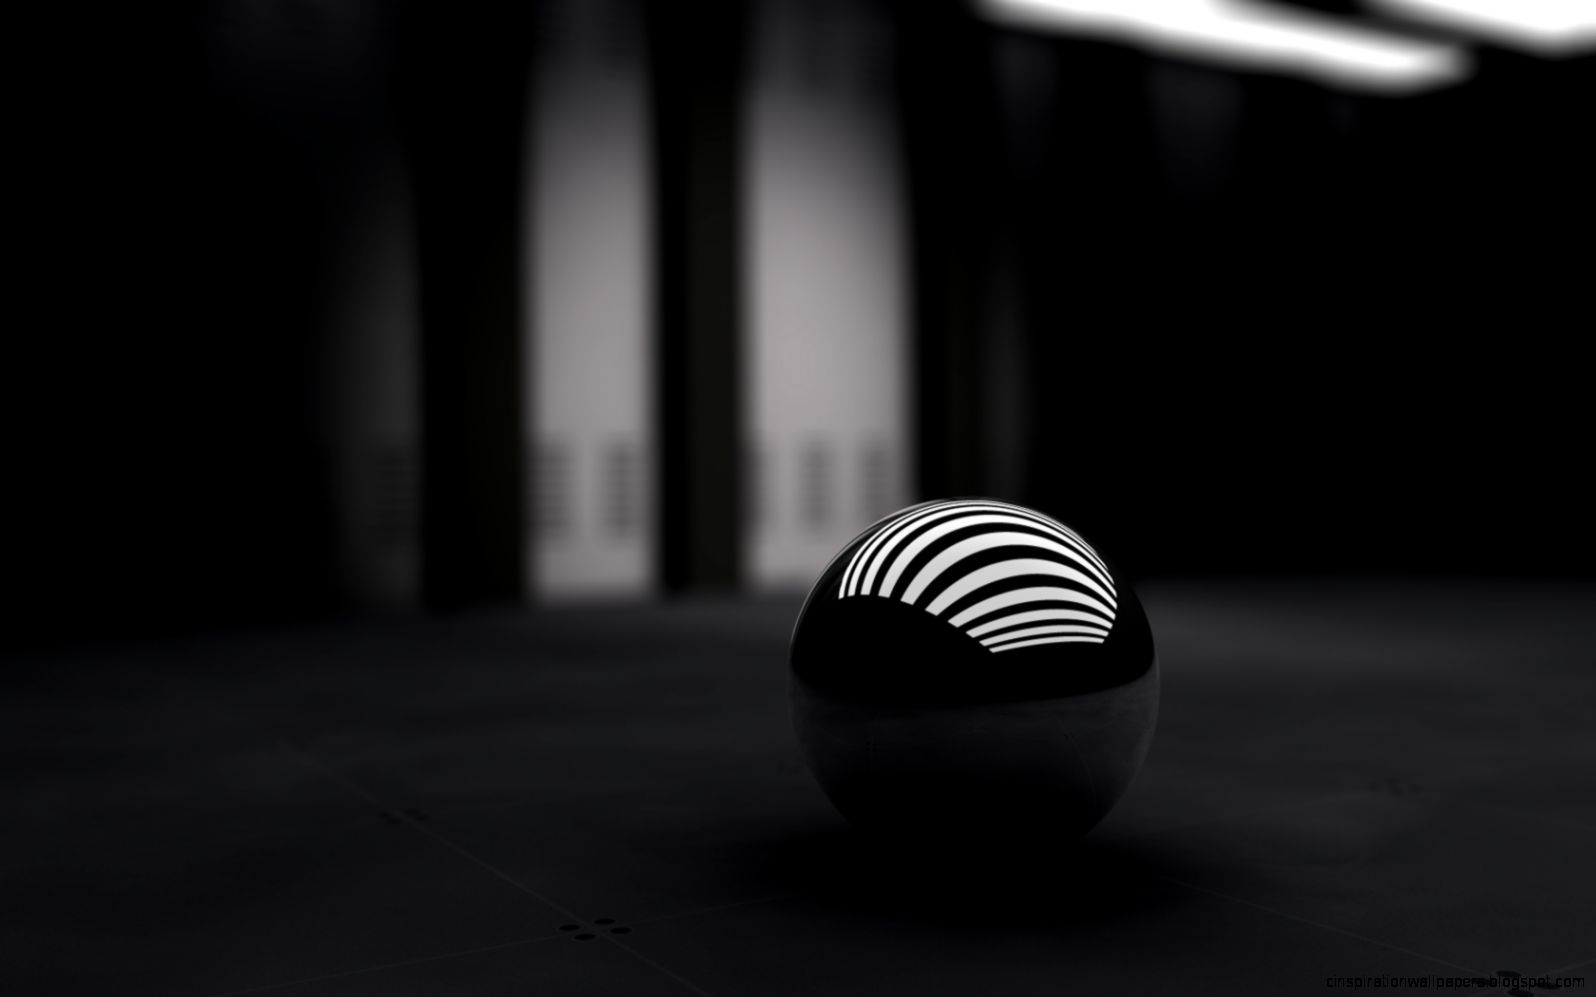 3D Black Ball Hd Wallpapers